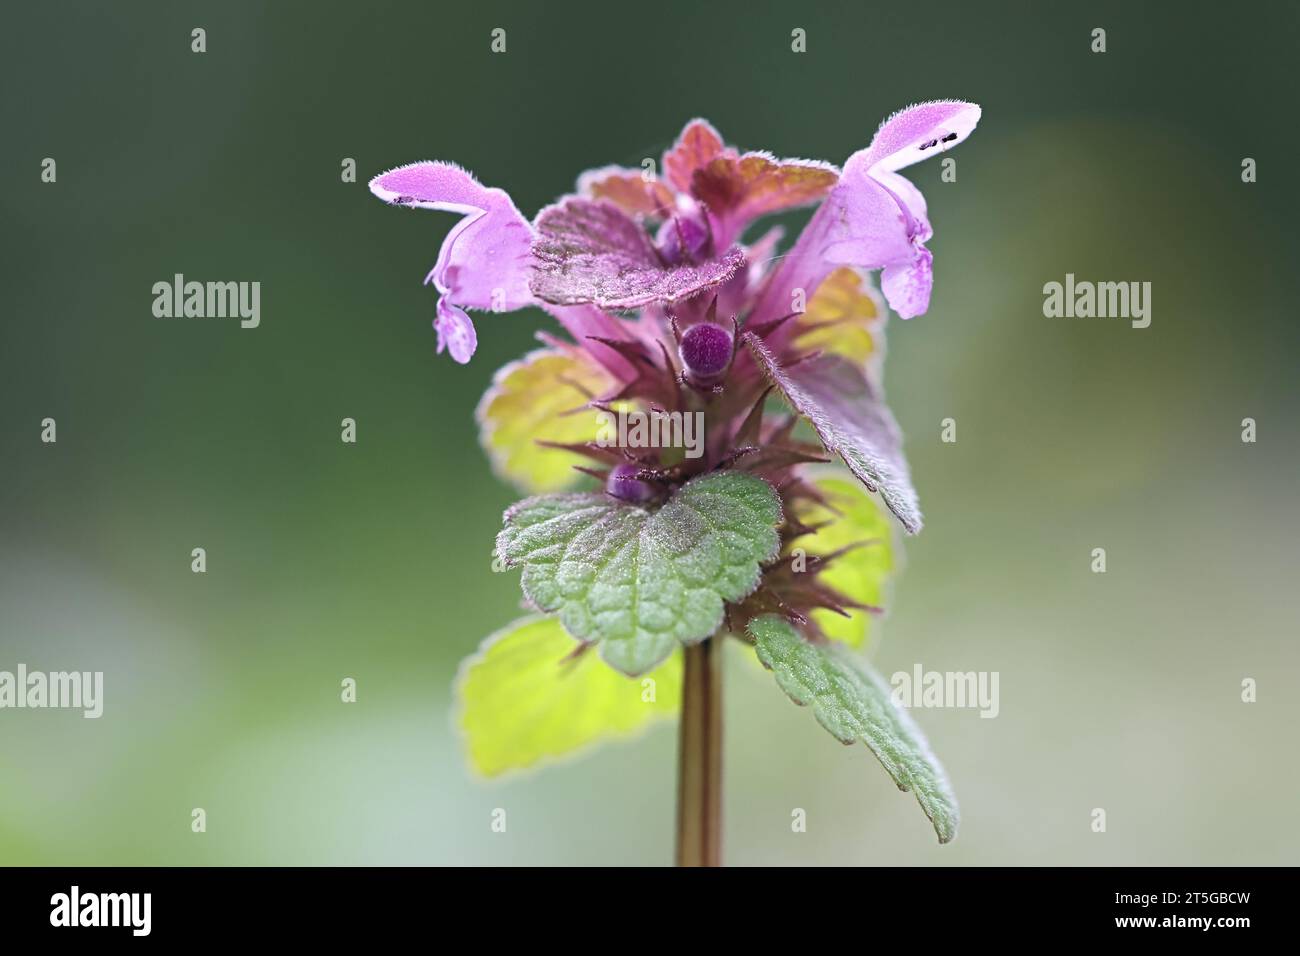 Lamium purpureum, known as red dead-nettle or purple dead-nettle, wild flowering plant from Finland Stock Photo